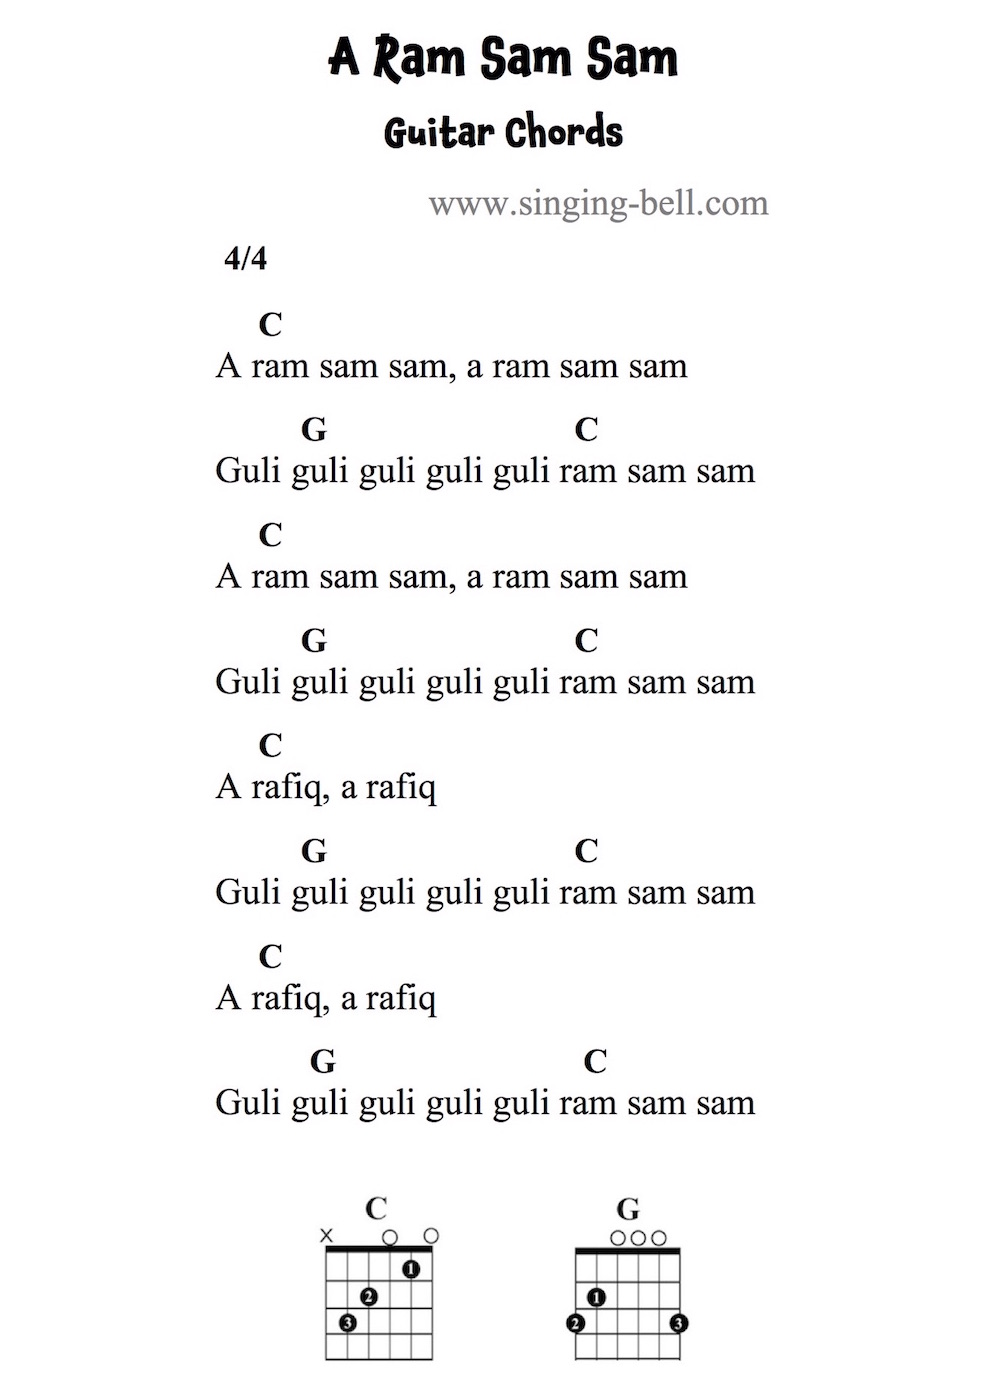 A Sam Sam - Chords, Tabs, Easy Sheet Music PDF